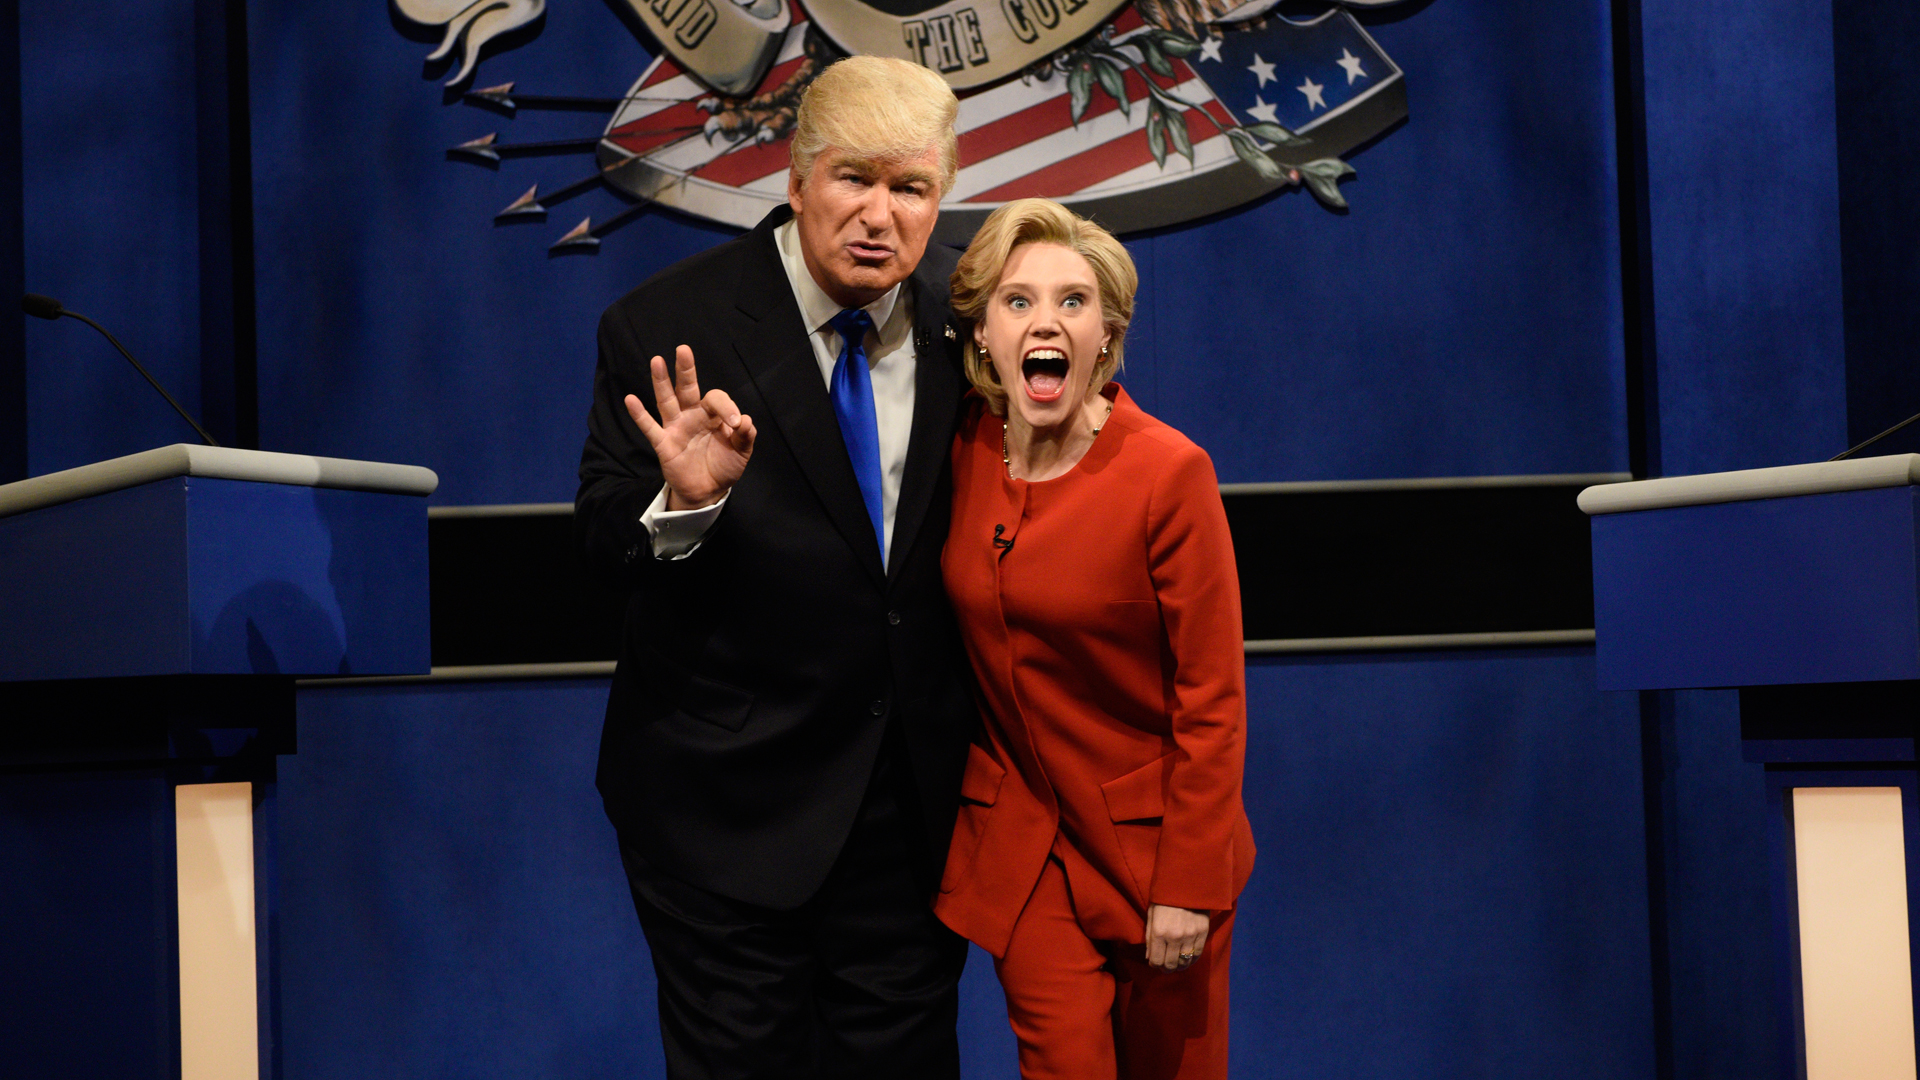 Watch Donald Trump vs. Hillary Clinton Debate Cold Open From Saturday Night Live - NBC.com1920 x 1080